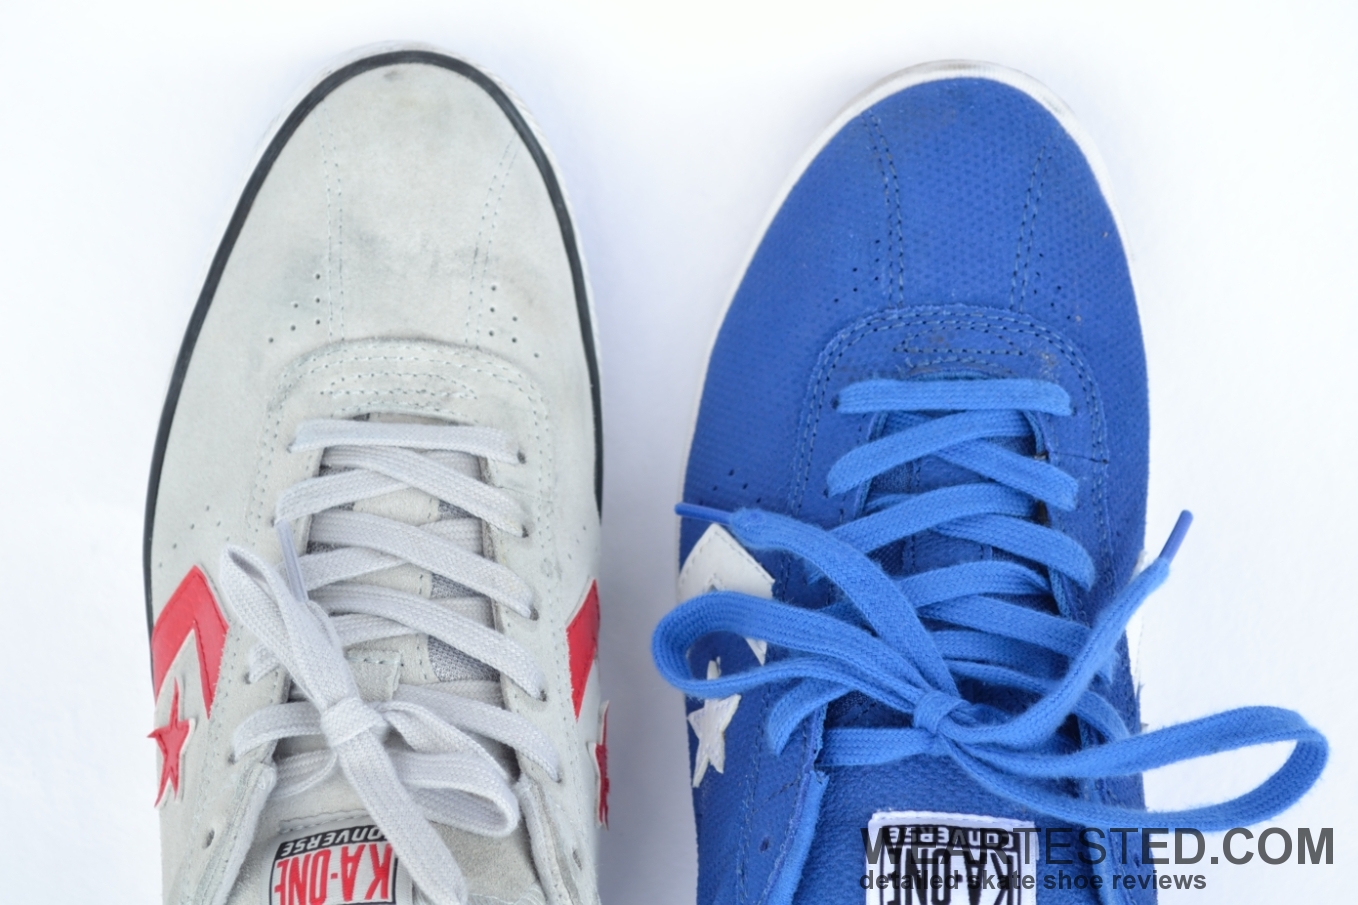 Converse & KA-One vulc review - Weartested - detailed skate shoe